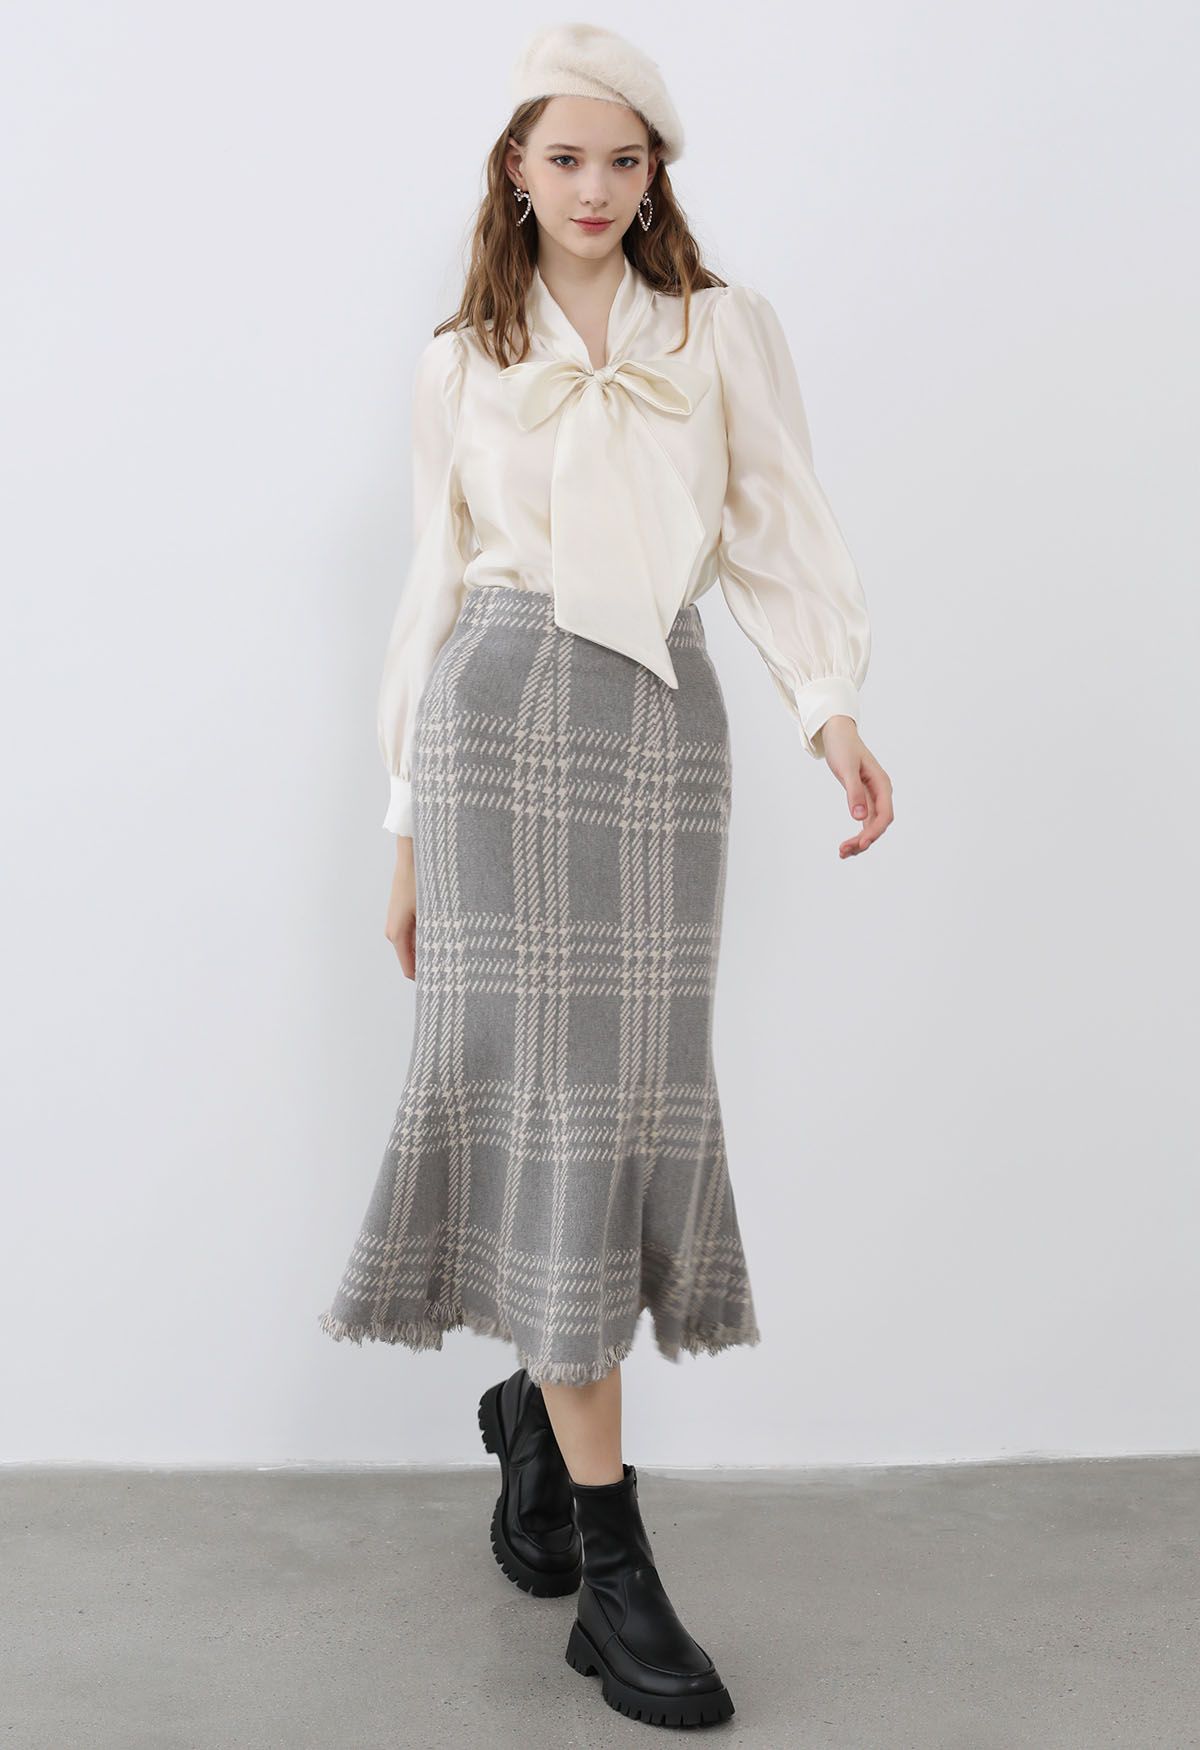 Vintage Plaid Fringed Hemline Knit Skirt in Grey